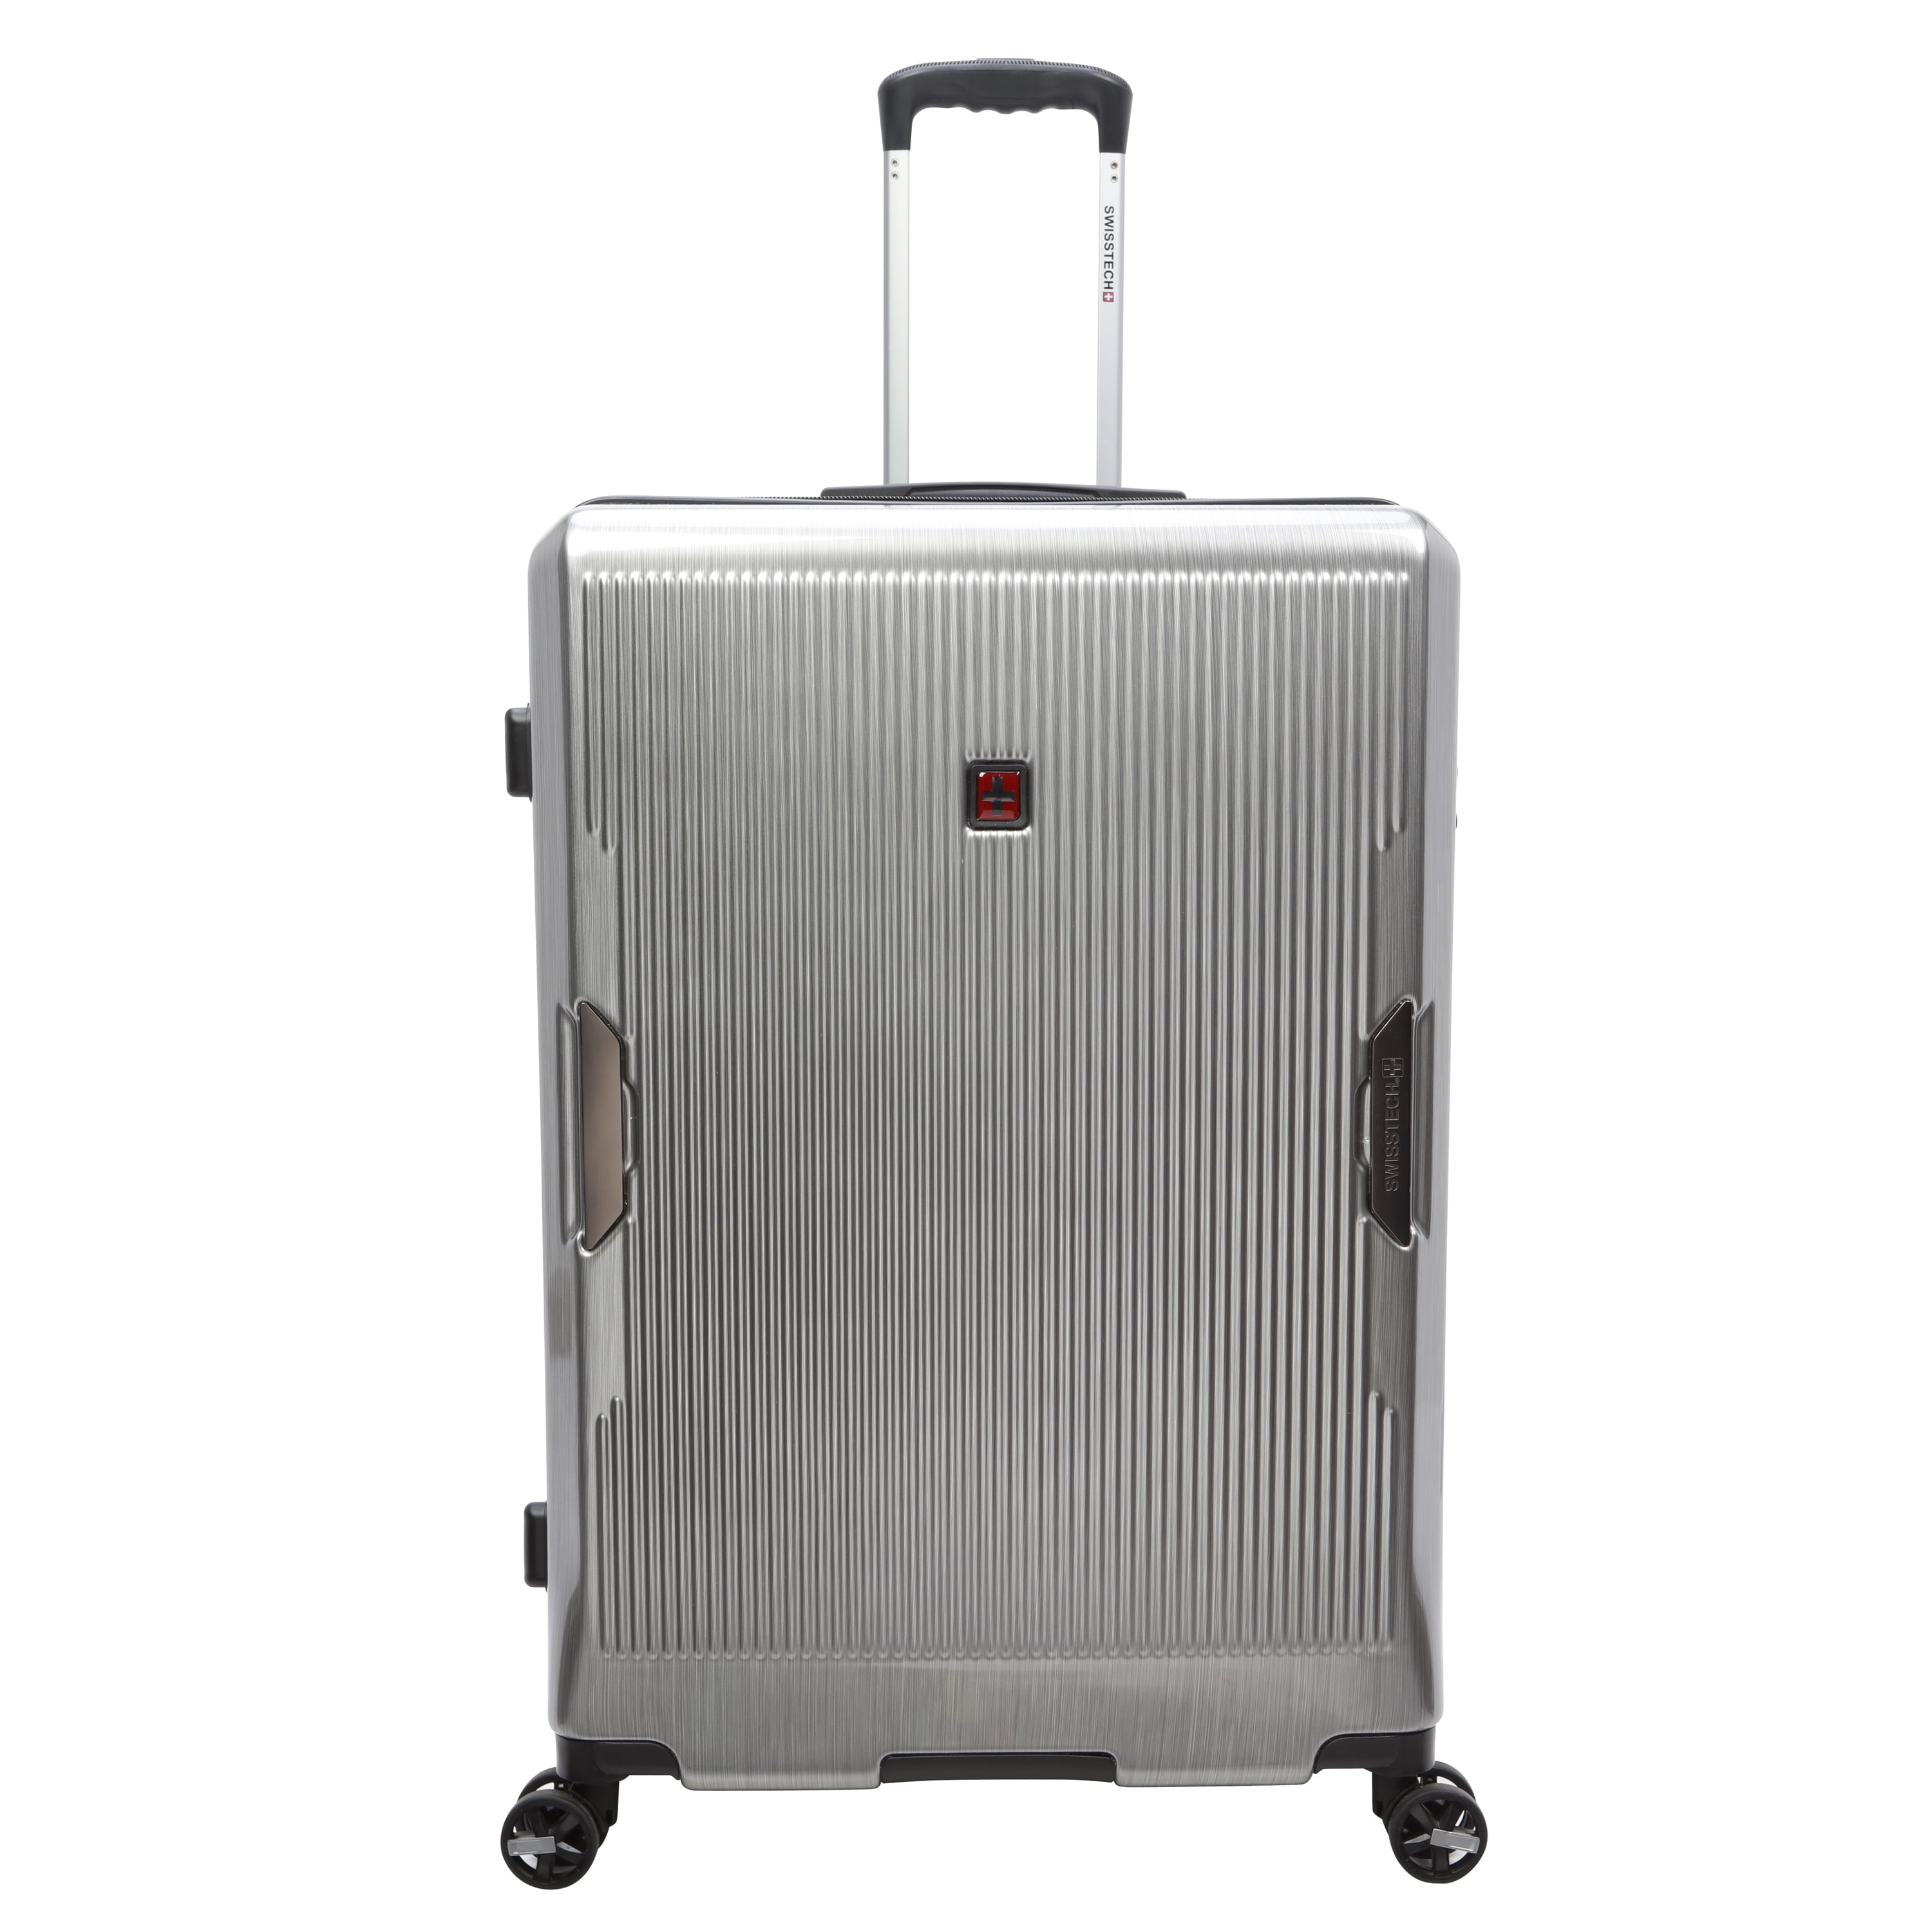 Swiss Tech 29" Hardside Checked Luggage, Grey $50.40